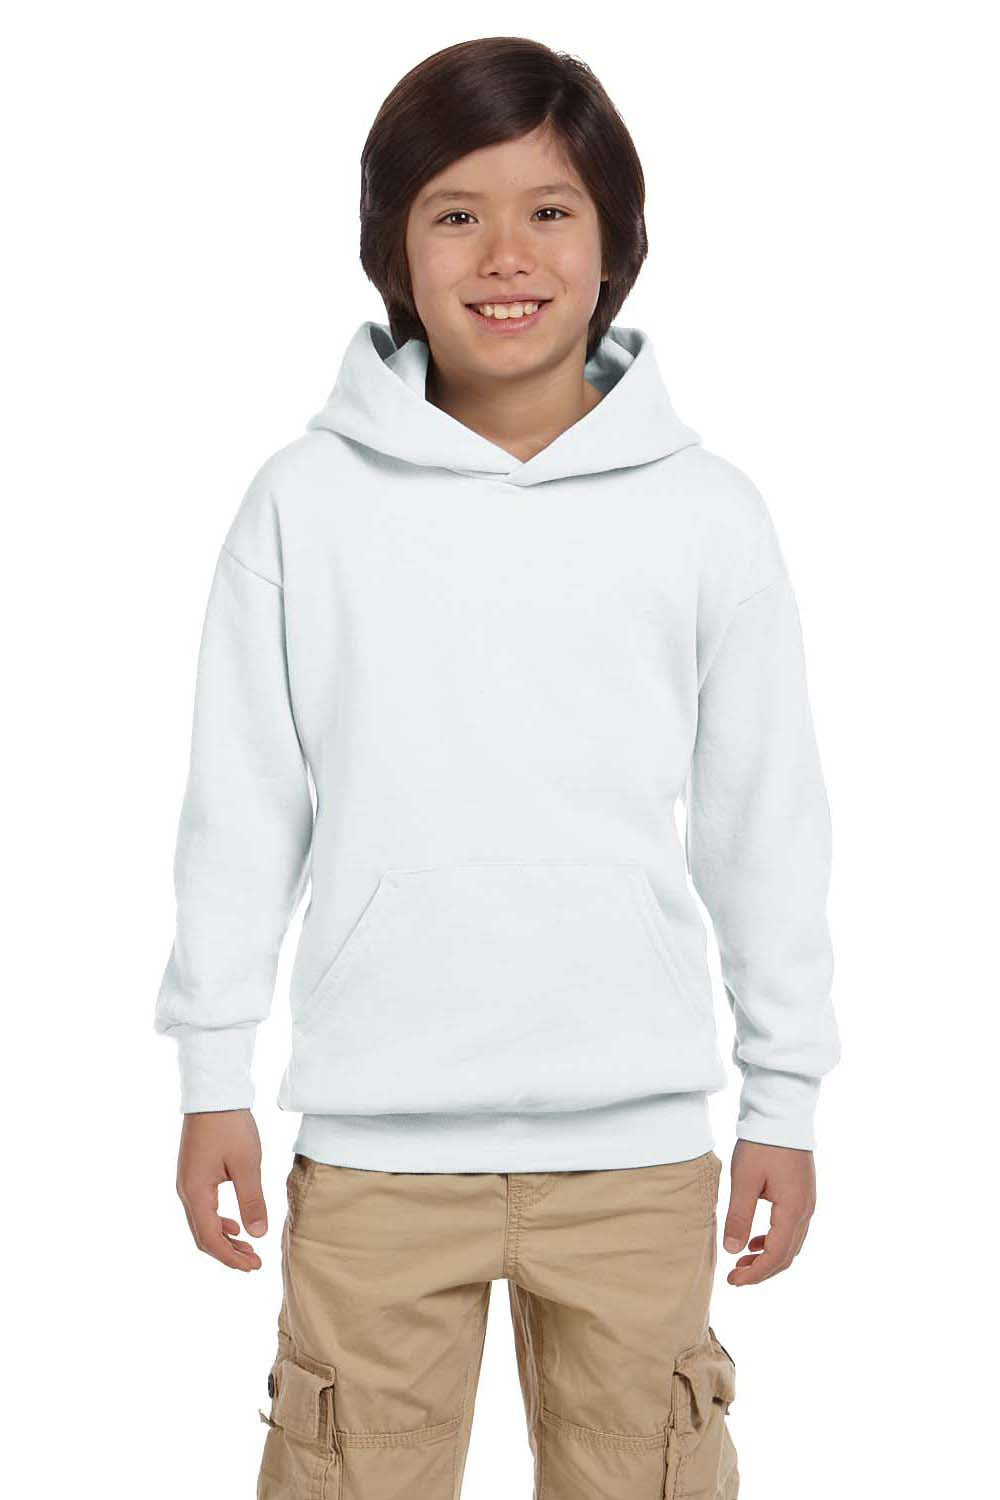 Hanes P473 Youth EcoSmart Print Pro XP Hooded Sweatshirt Hoodie White Front